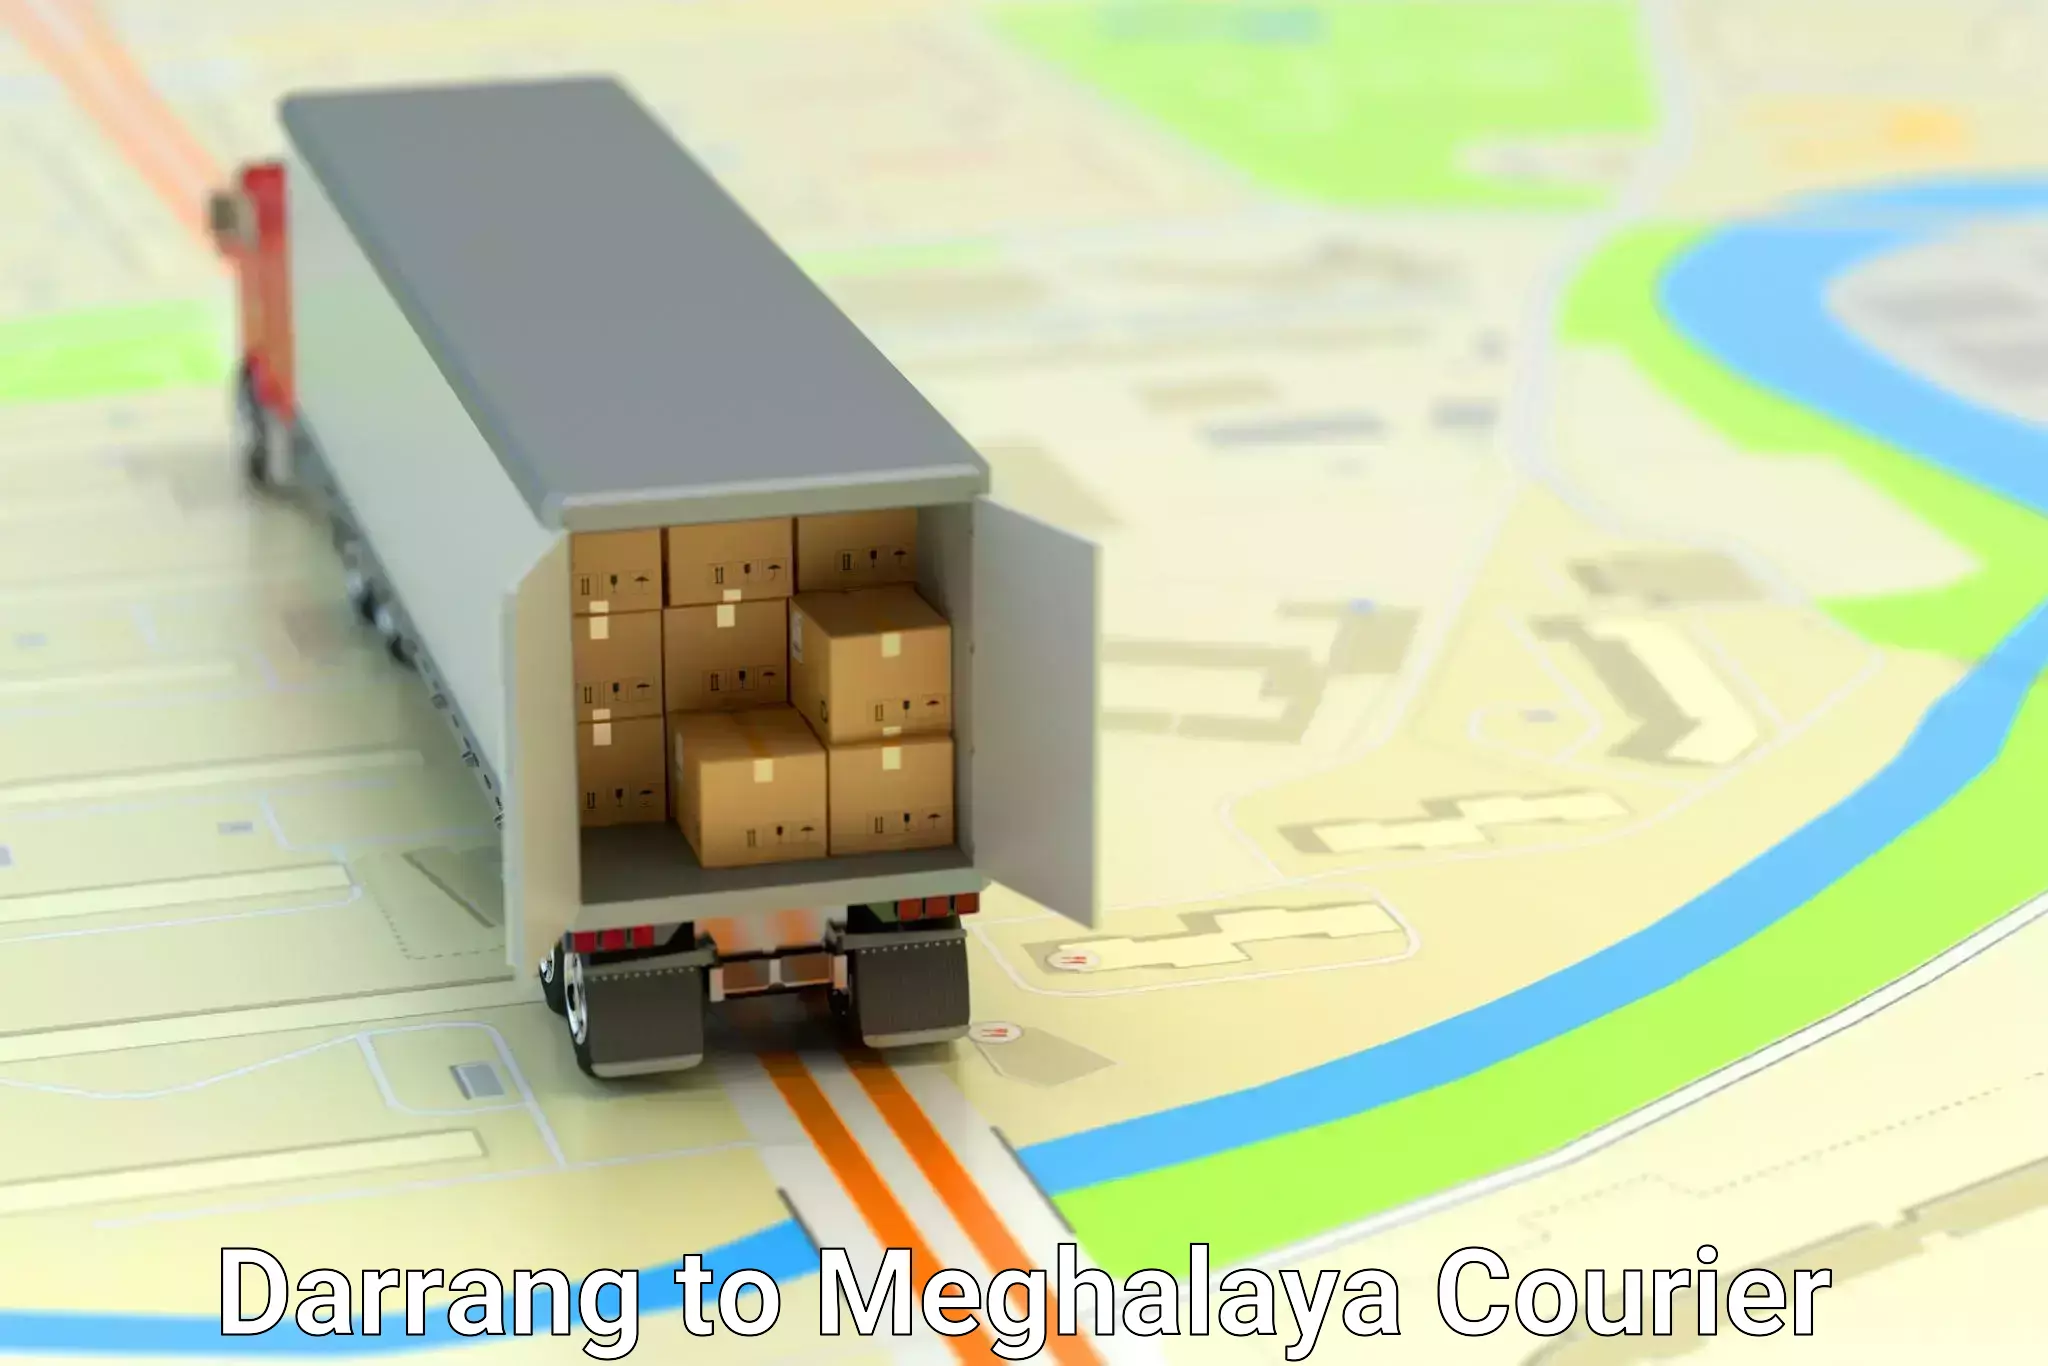 Global shipping networks Darrang to Meghalaya